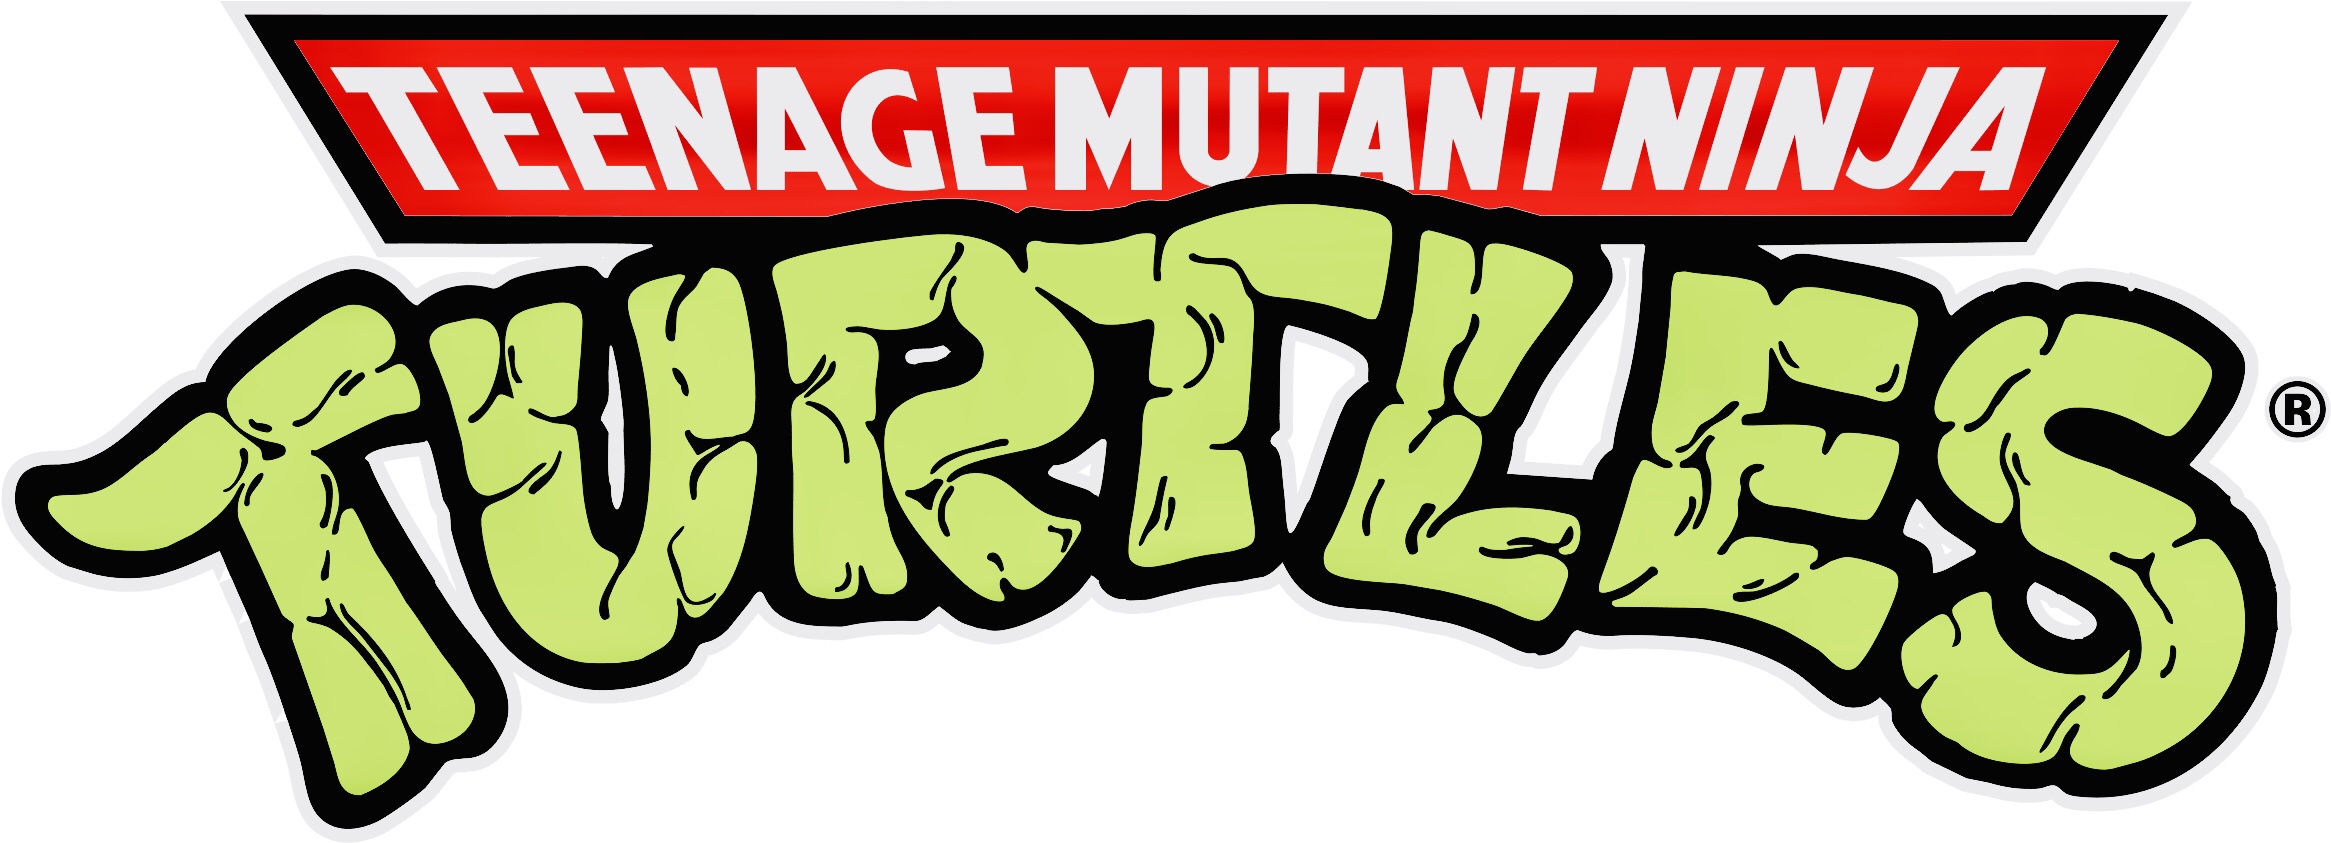 Vintage Teenage Mutant Ninja Turtles (TMNT) Raphael Plastic Flip Wrist  Watch (1988) - Red + Green Kids Watch - New Battery